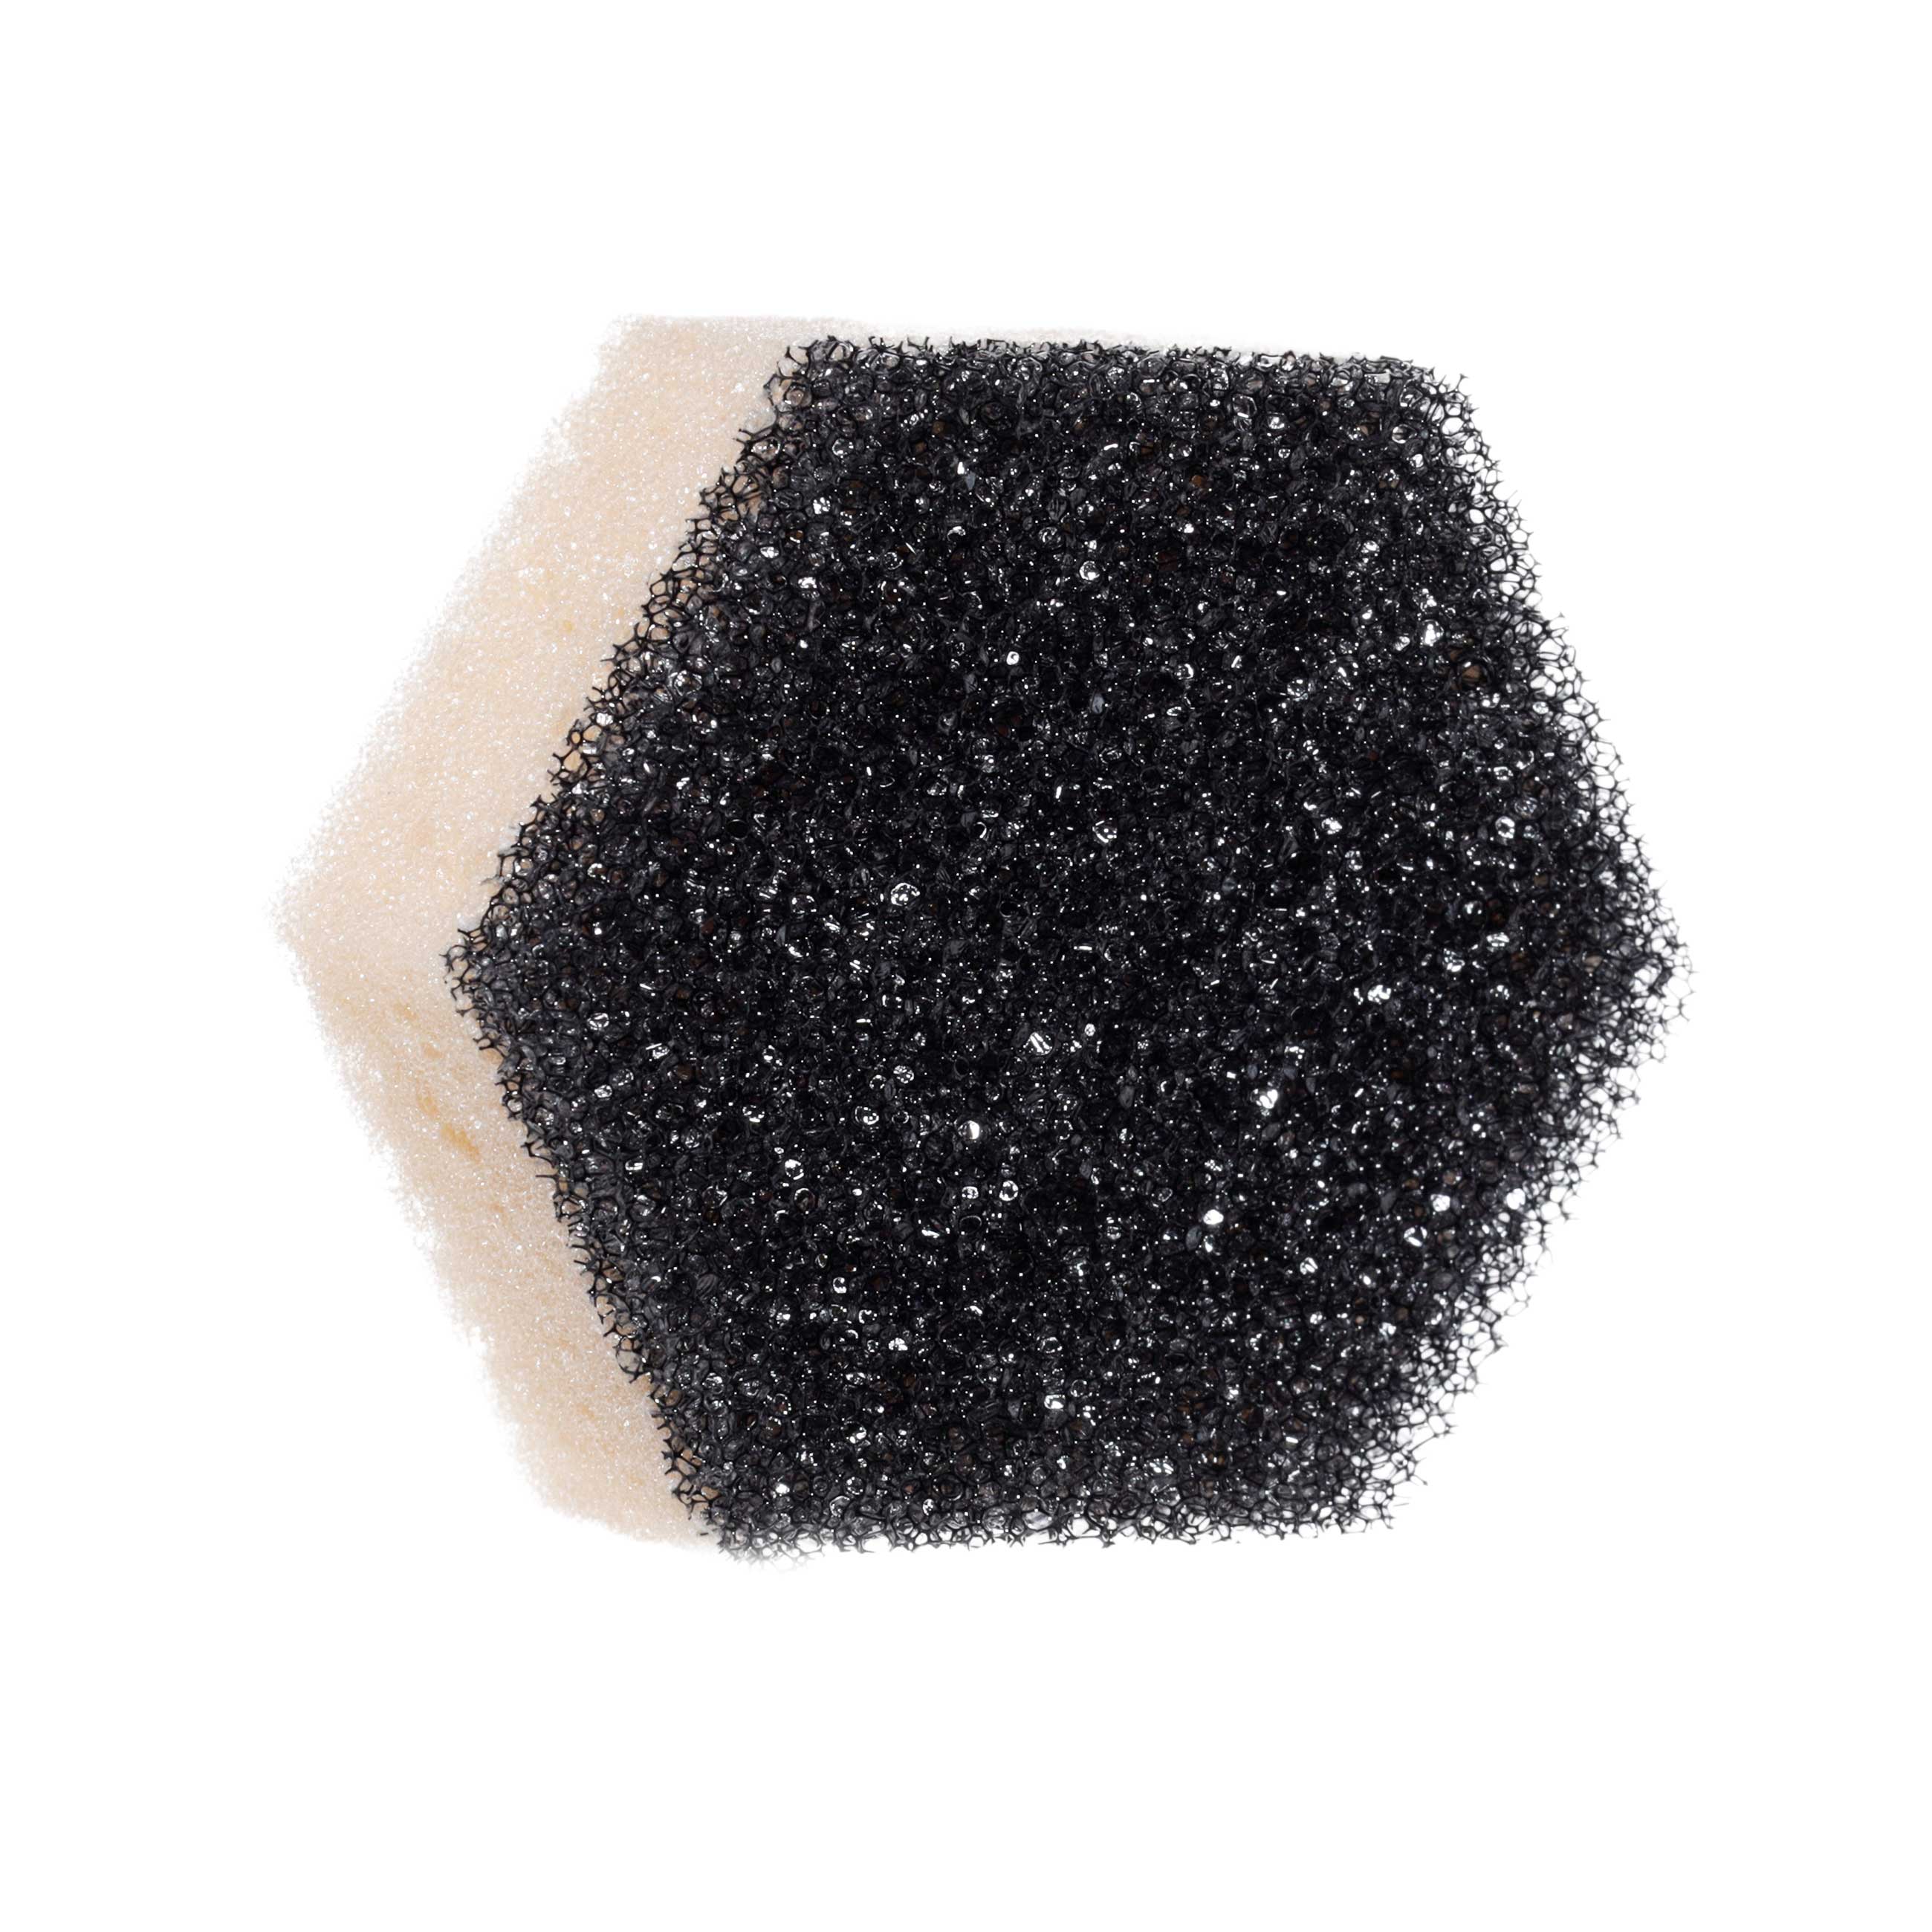 Dish washing sponge, 9x8 cm, 3 pcs, foam rubber/abrasive, black and beige, Black clean изображение № 3